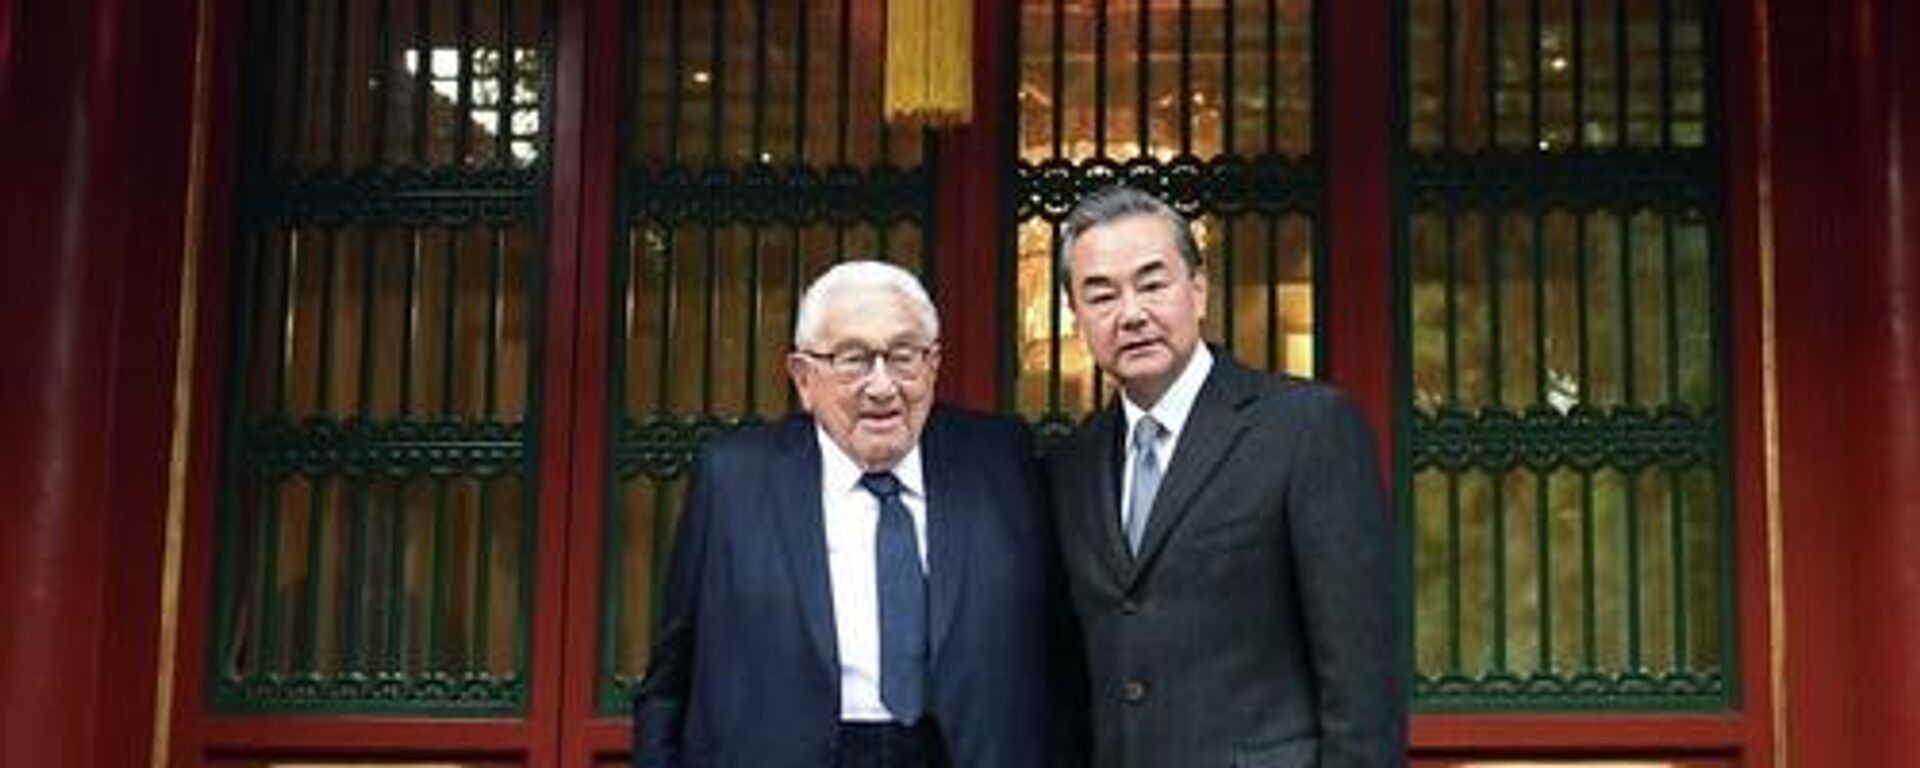 Henry Kissinger en reunión protocolaria en Pekín en 2018. - Sputnik Mundo, 1920, 20.07.2022